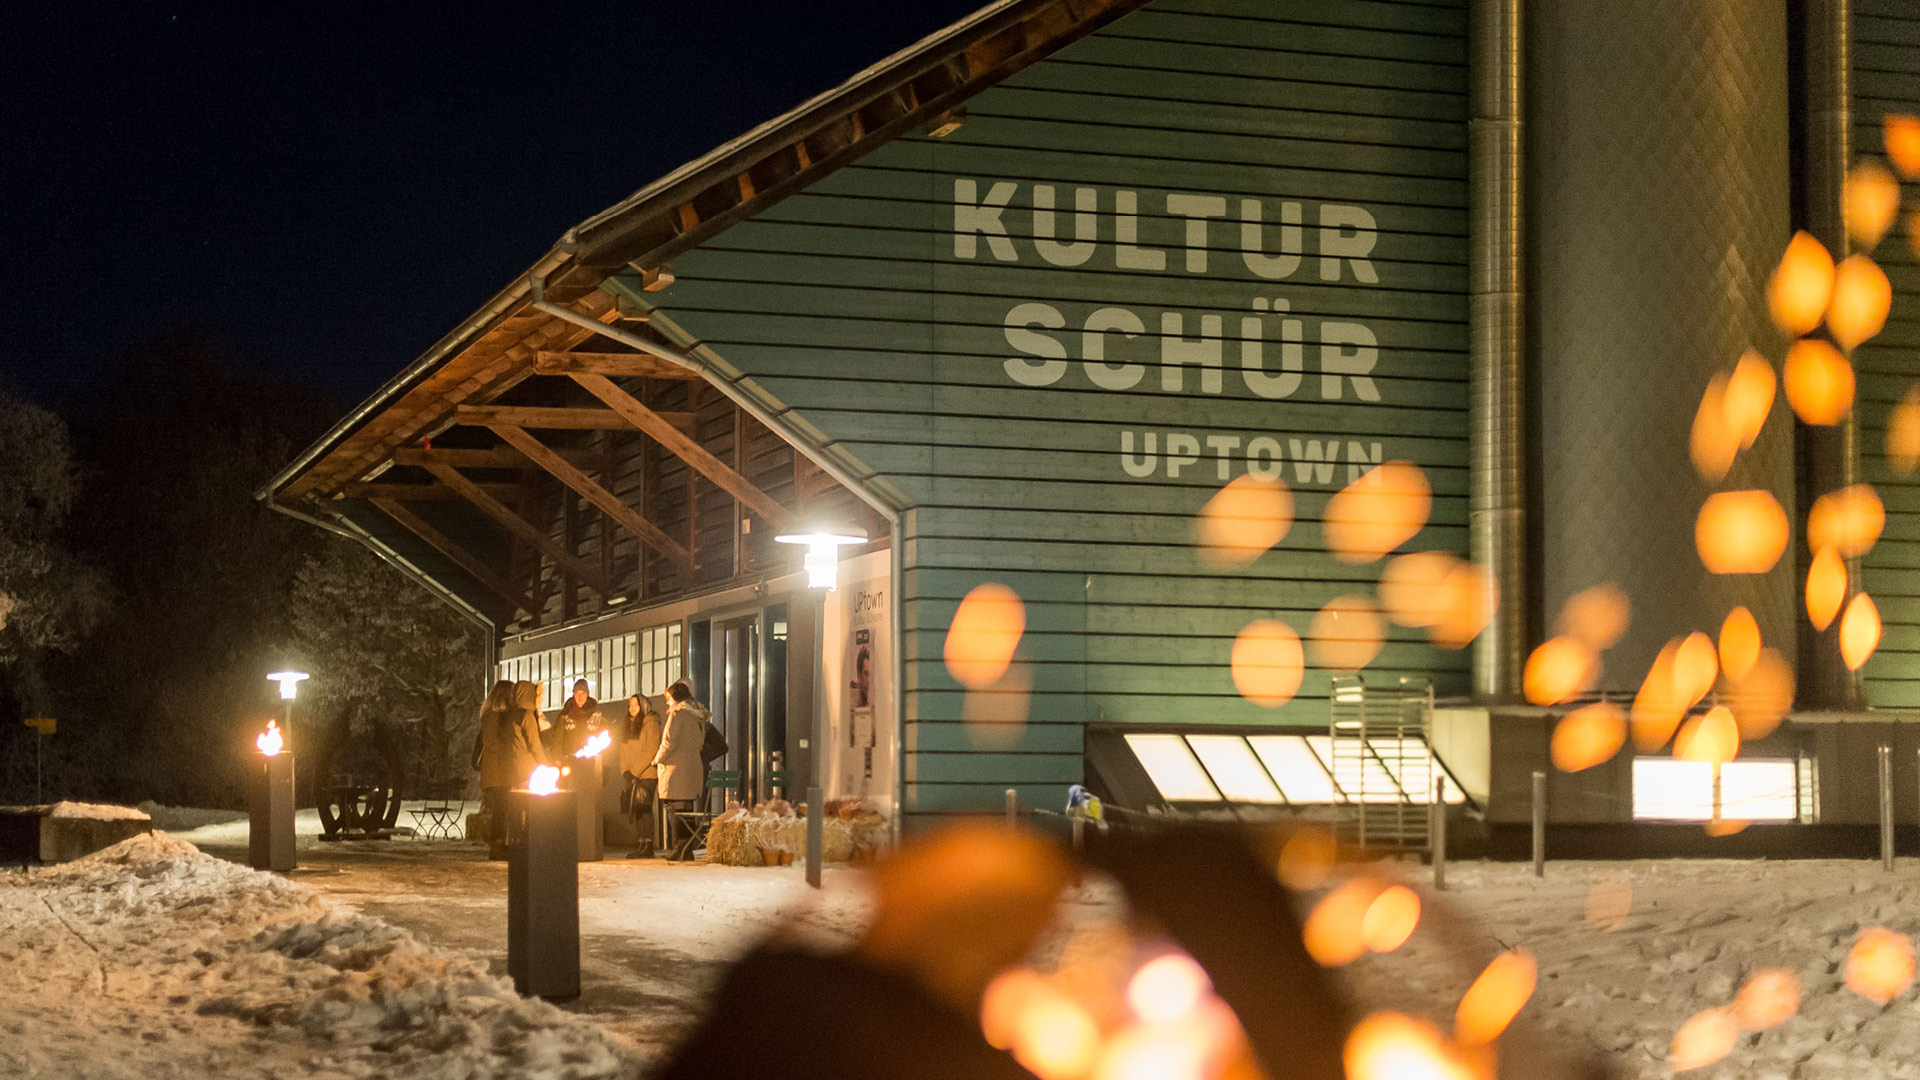 Attractively lit Kulturschür in snowy winter conditions